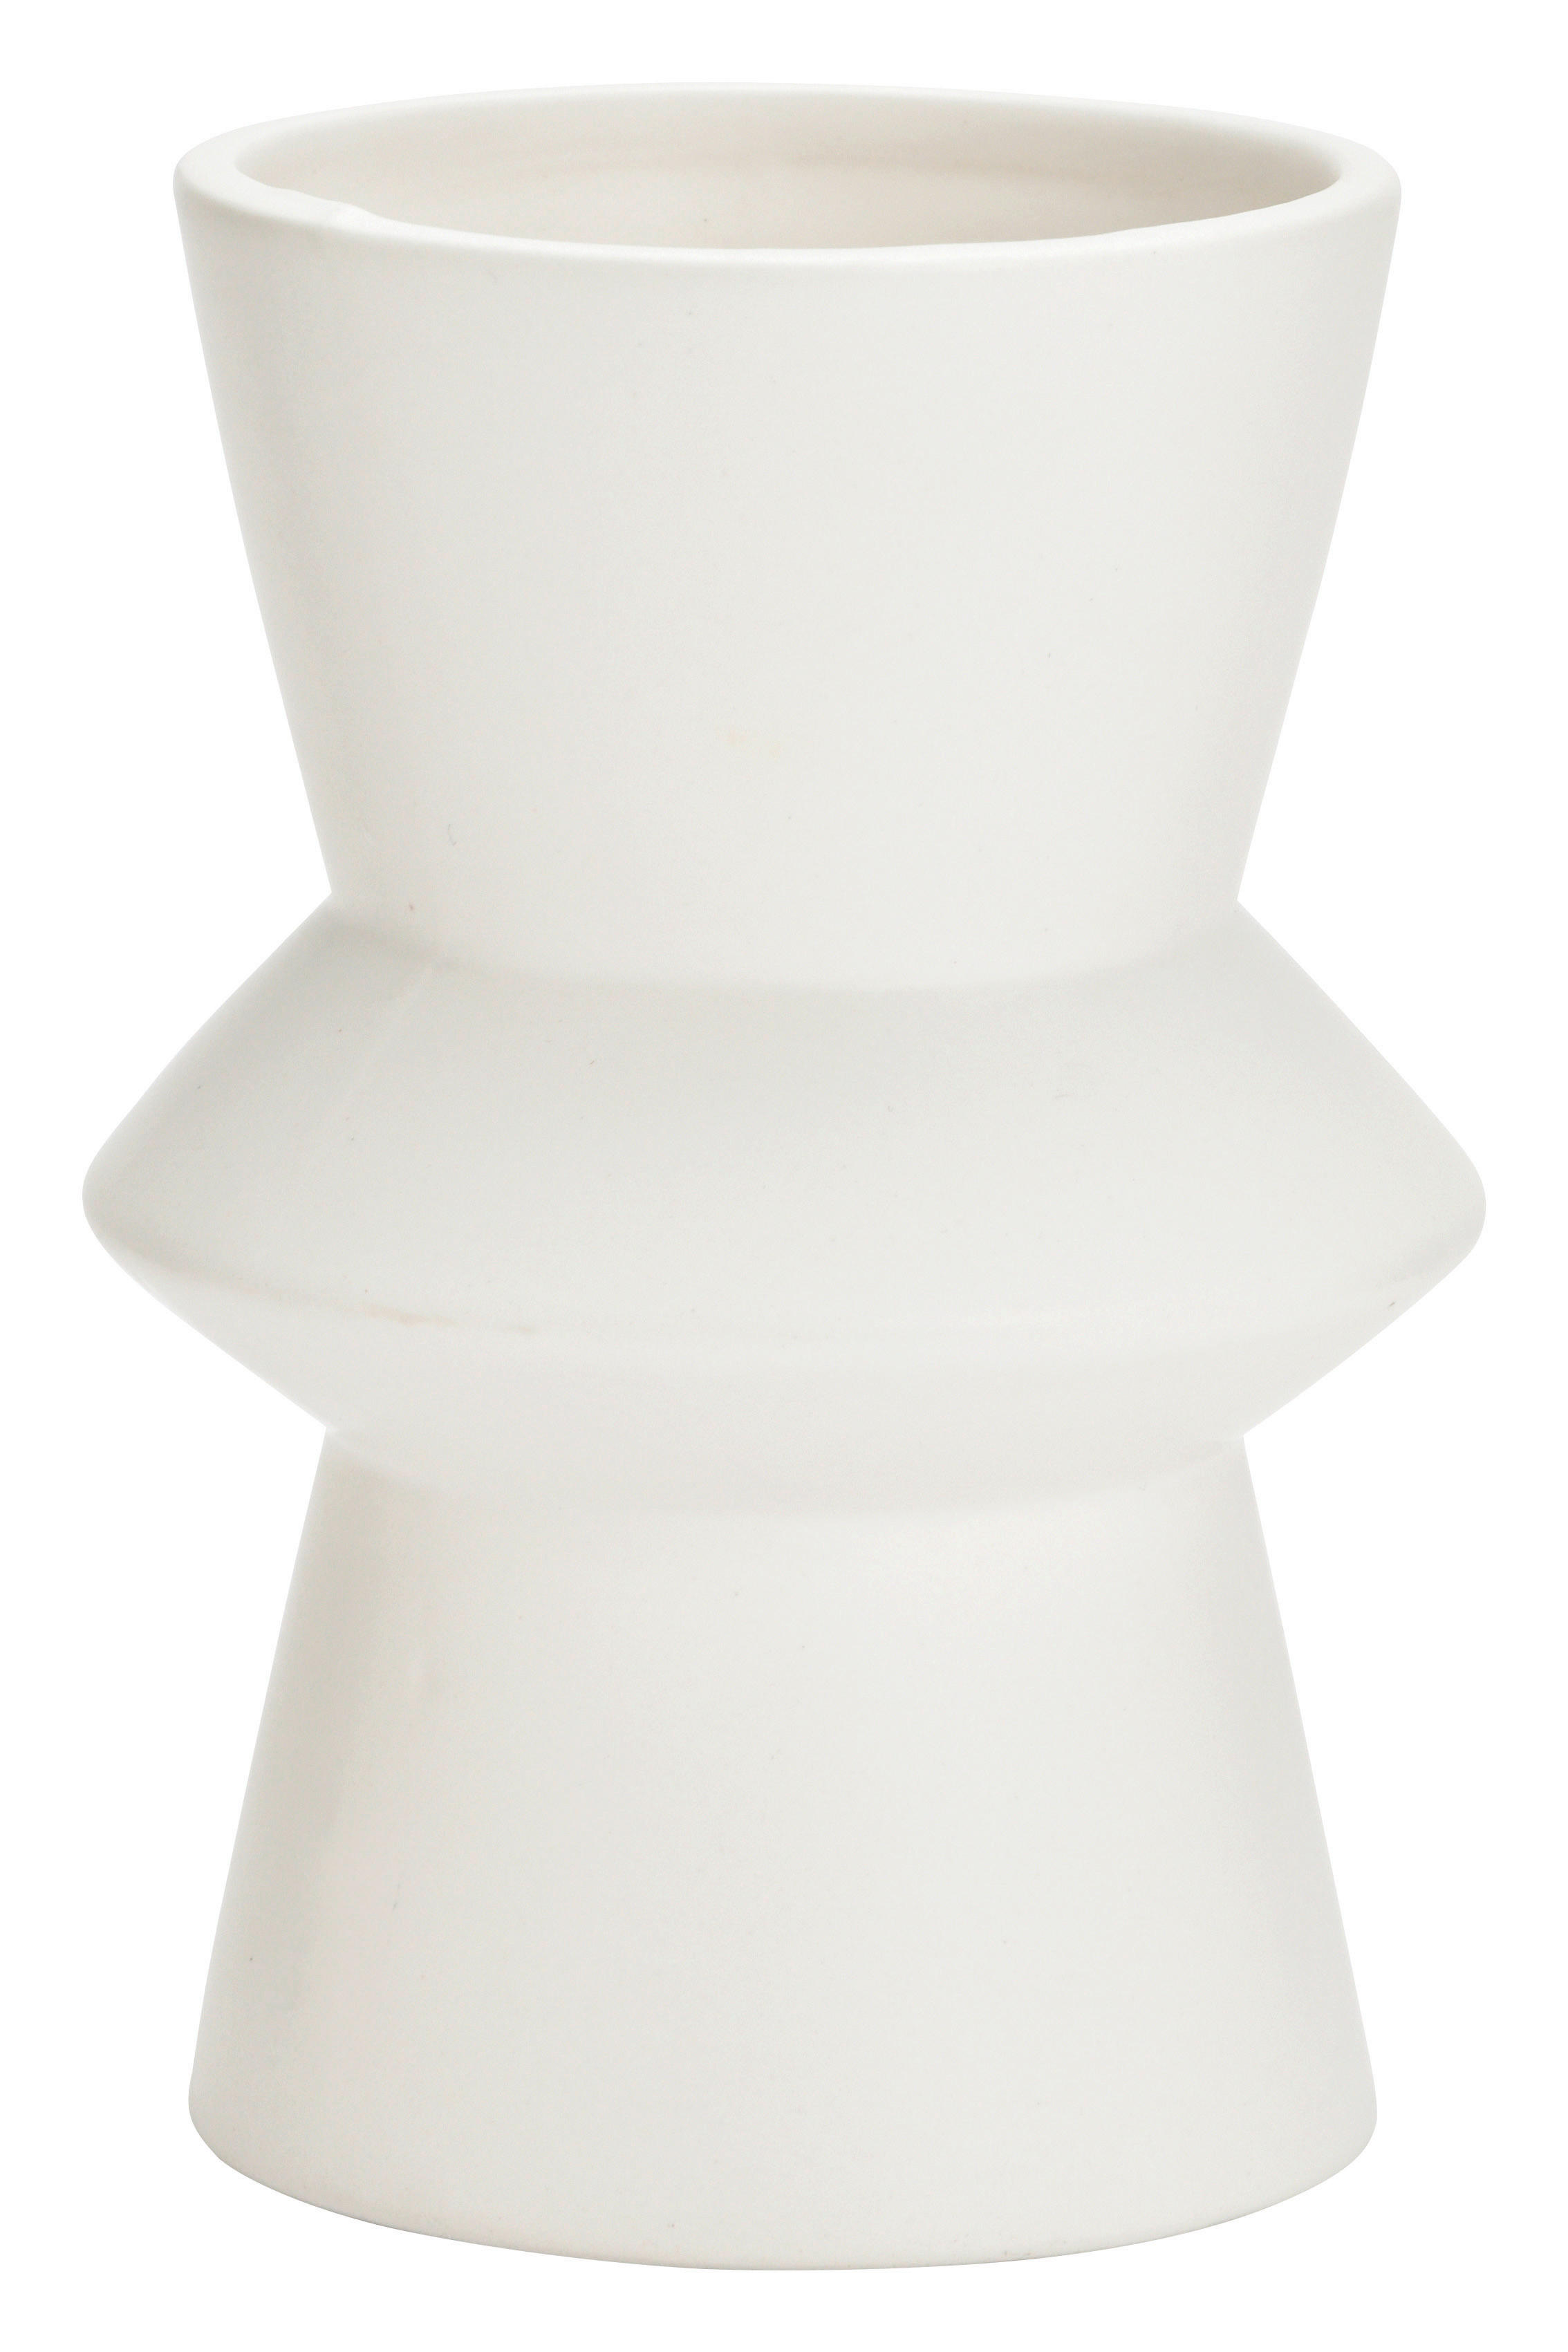 VASE 16 cm  - Weiß, Basics, Keramik (11/16/11cm)